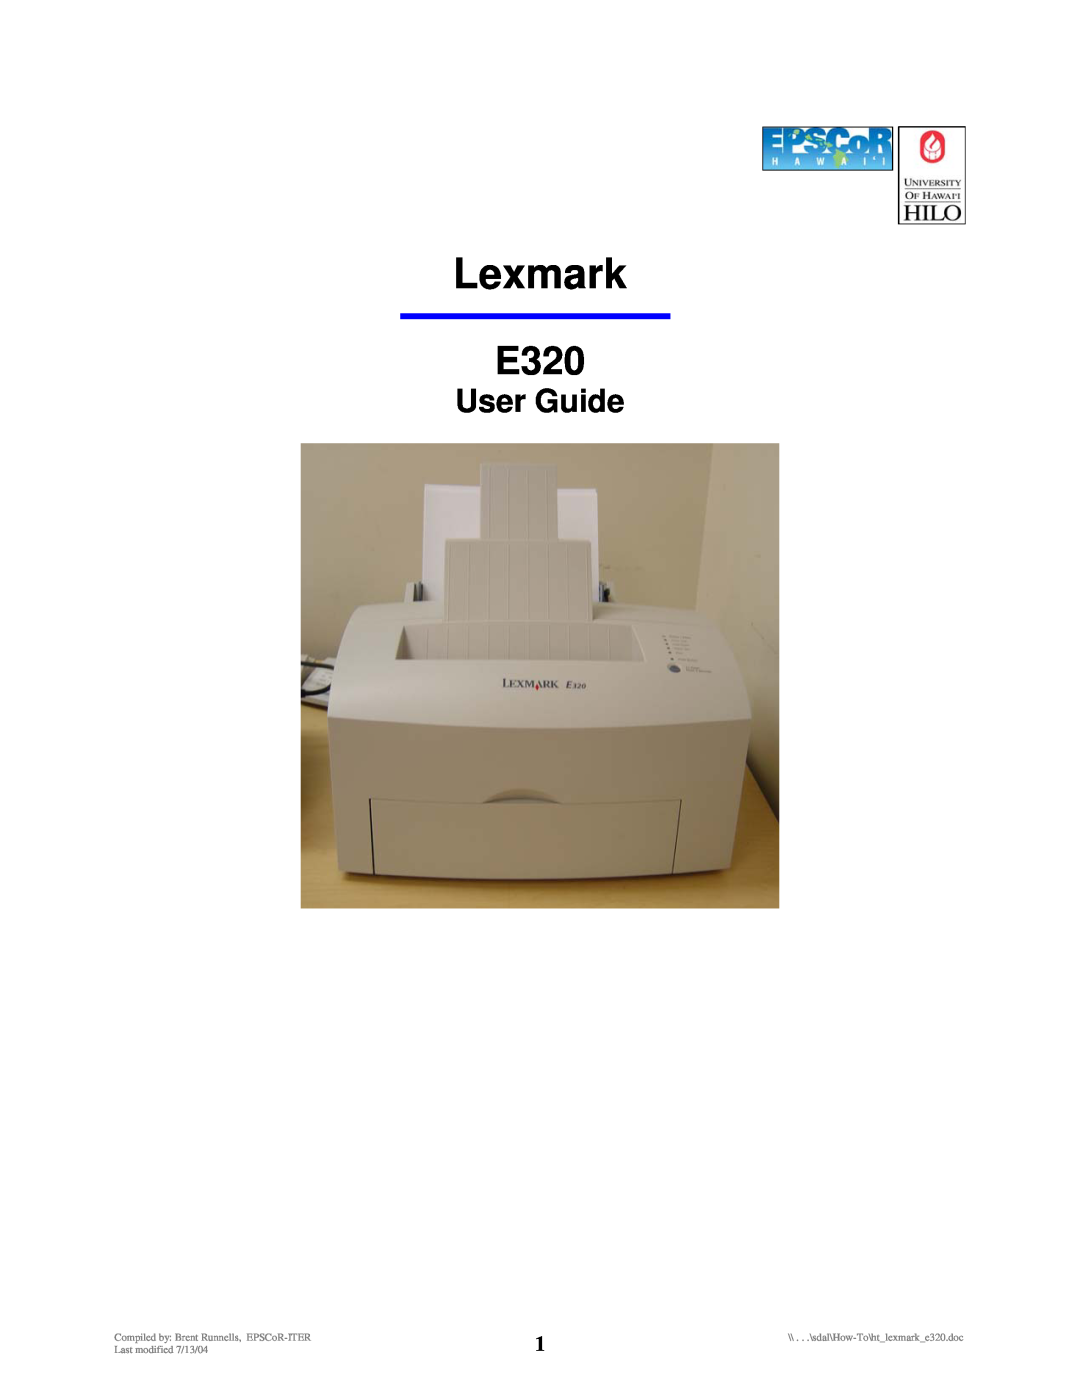 Lexmark E320 manual Lexmark, User Guide, Compiled by Brent Runnells, EPSCoR-ITER, Last modified 7/13/04 